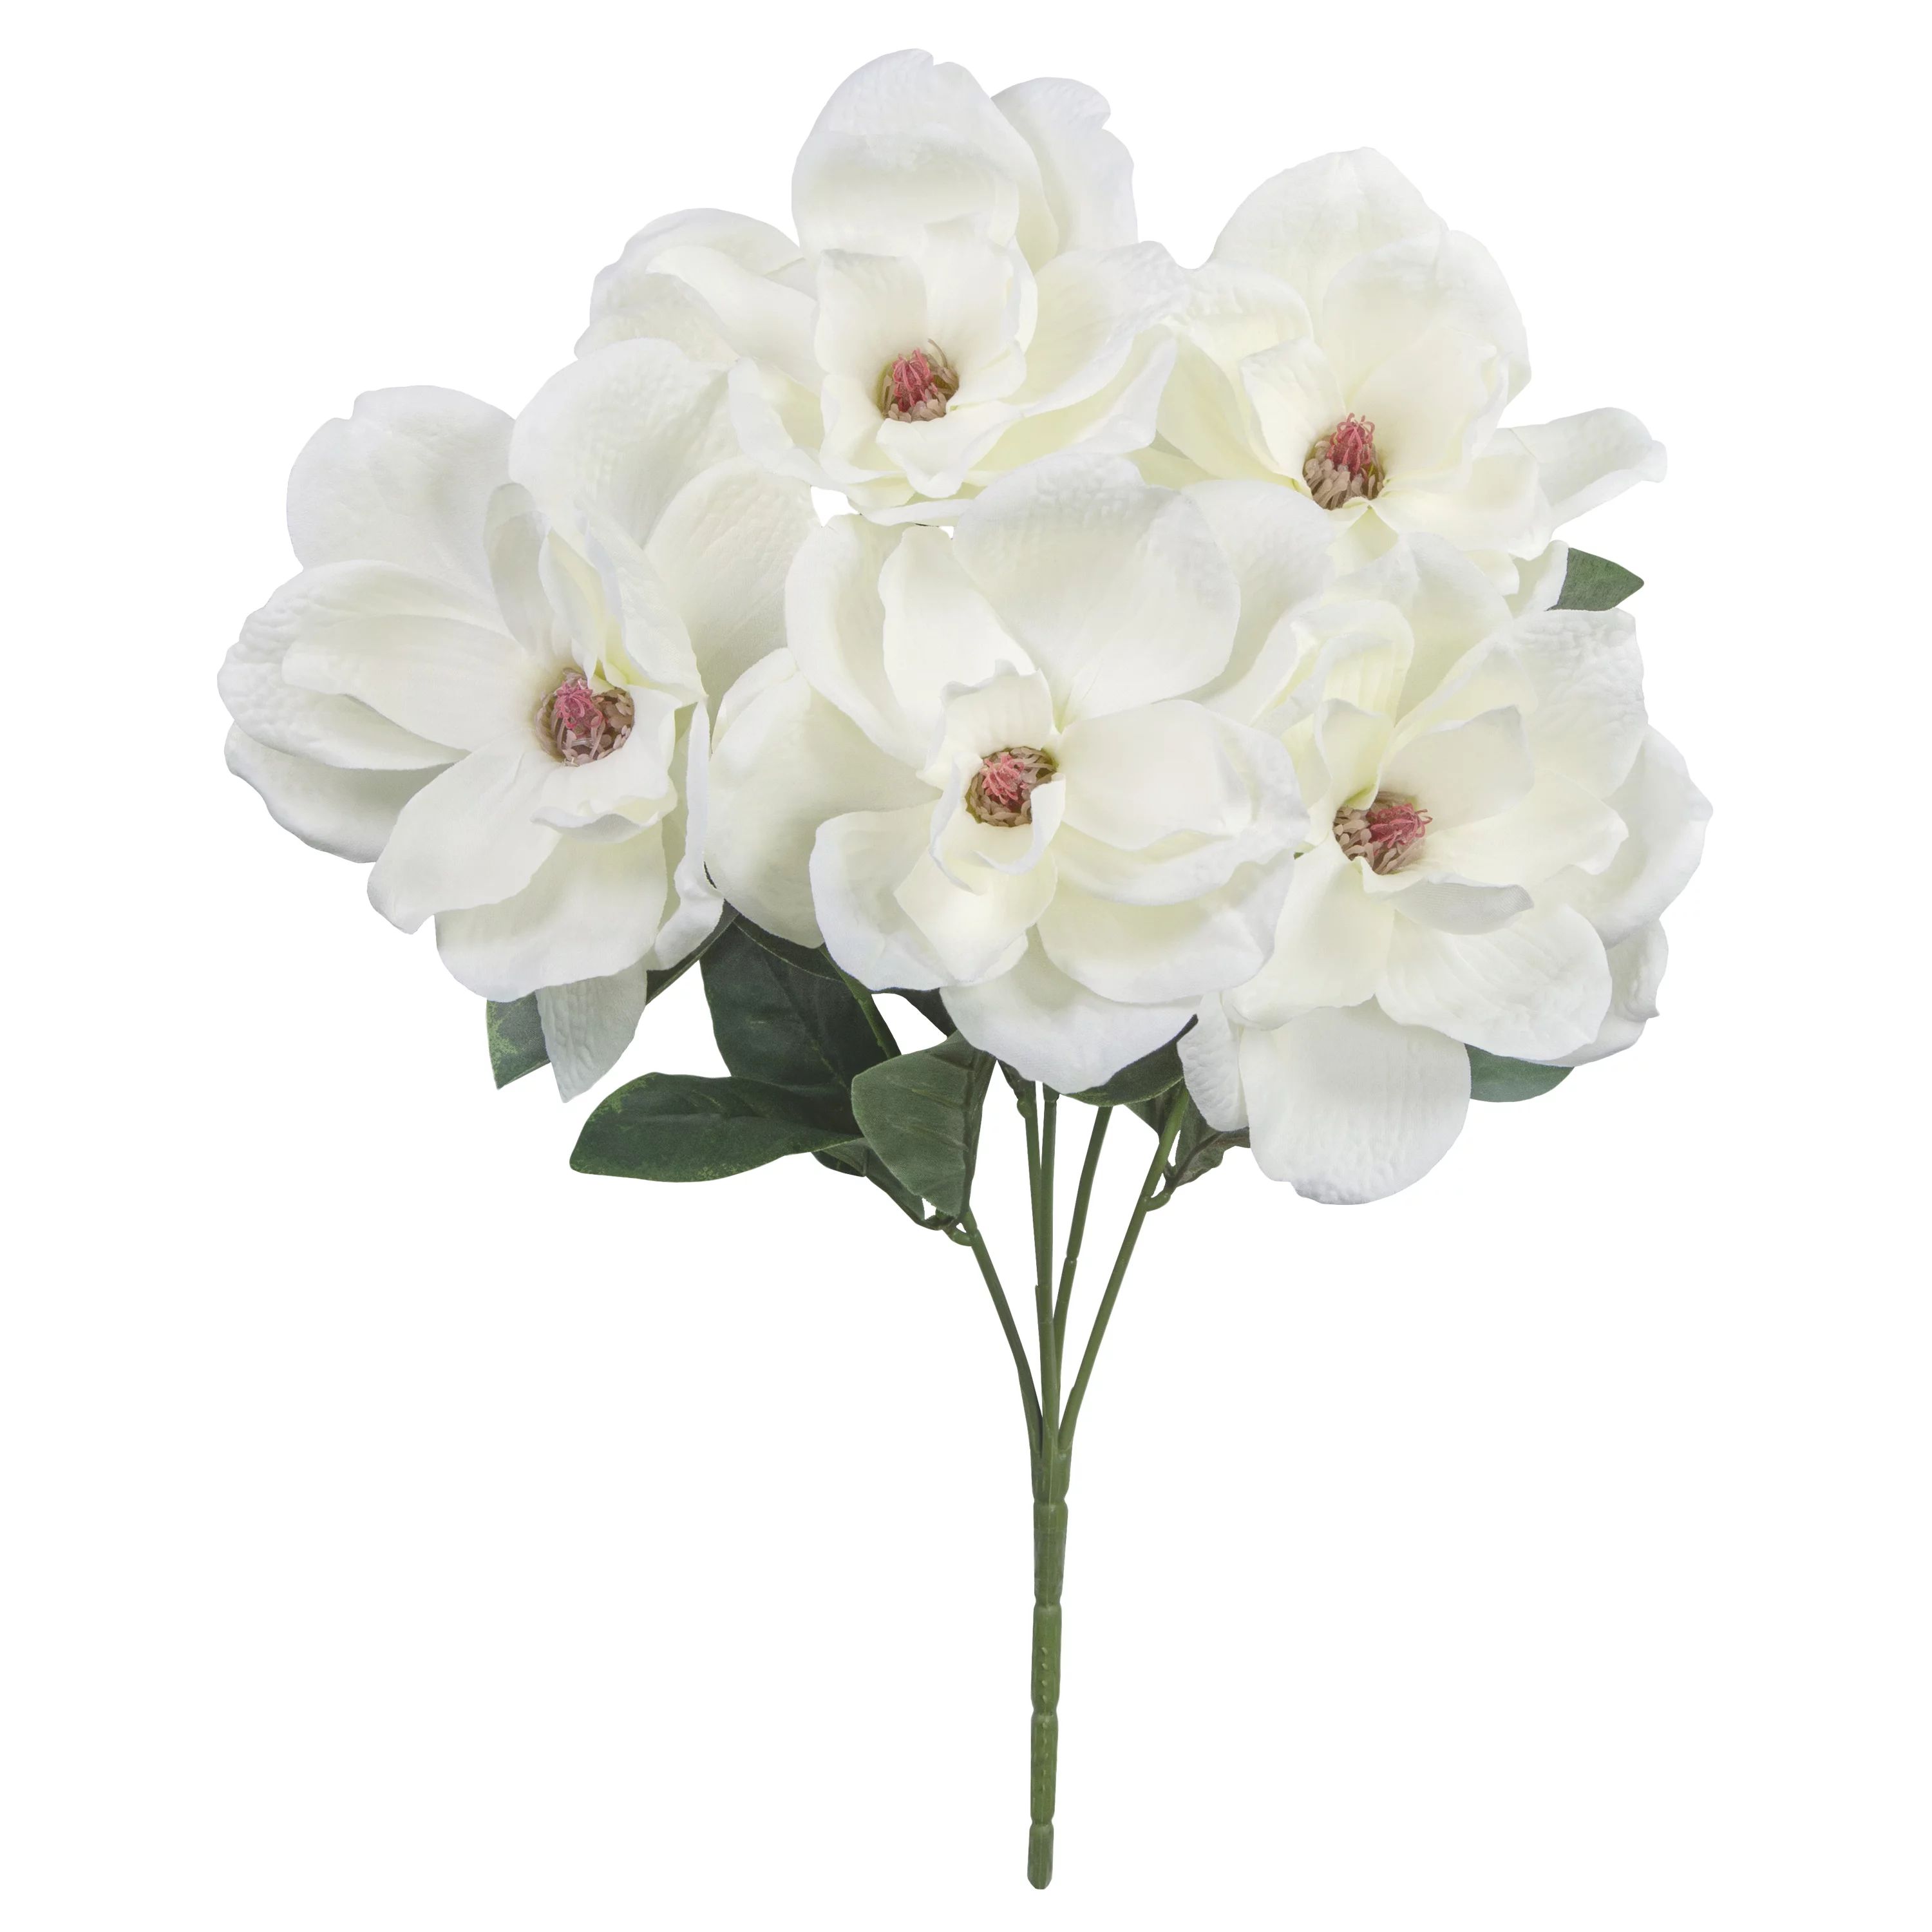 19" Artificial Silk White Magnolia Mixed Bush, by Mainstays | Walmart (US)